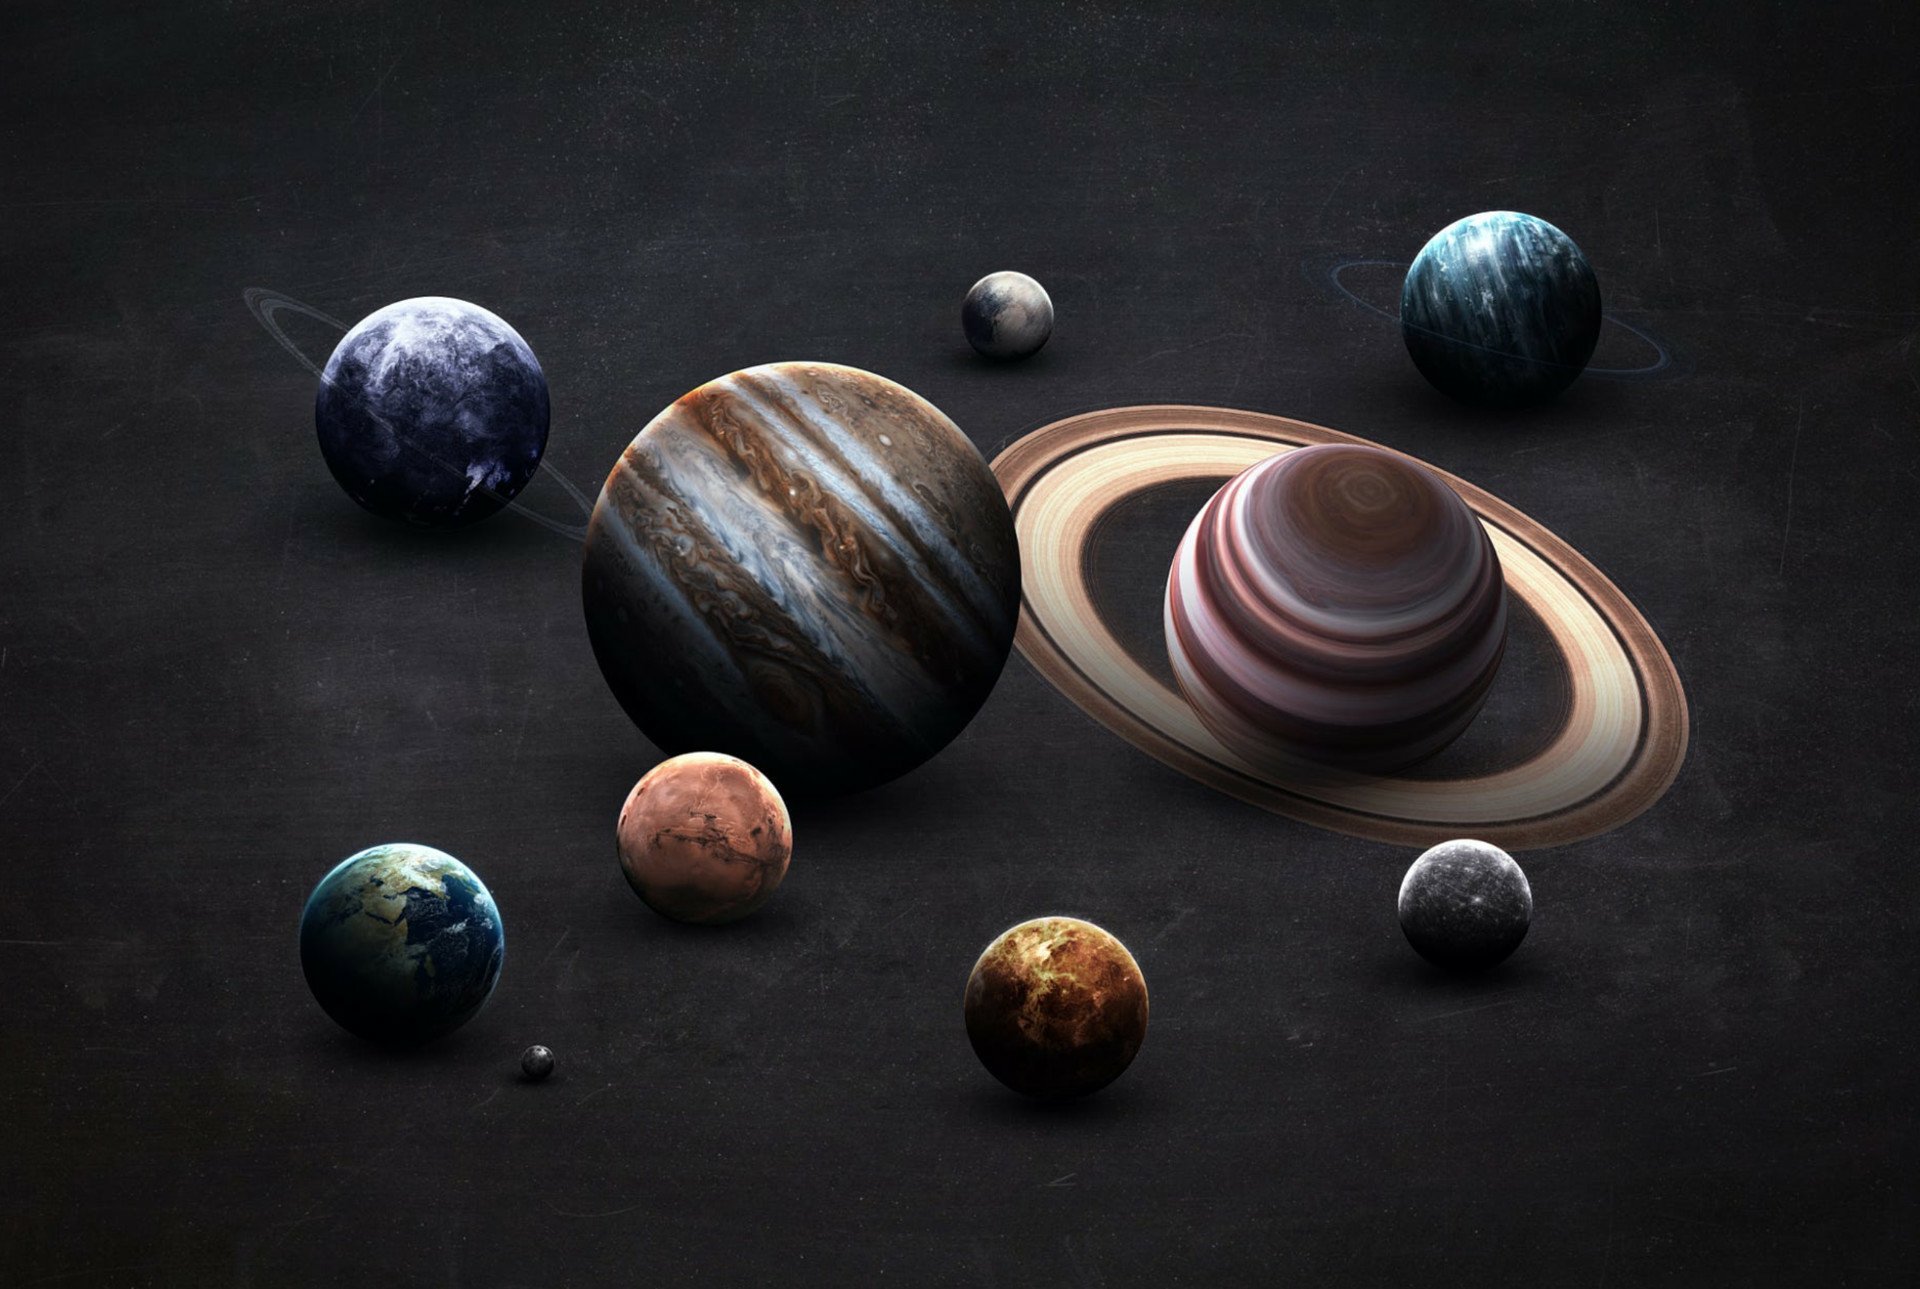 Download Sci Fi Solar System Hd Wallpaper By Vadim Sadovski